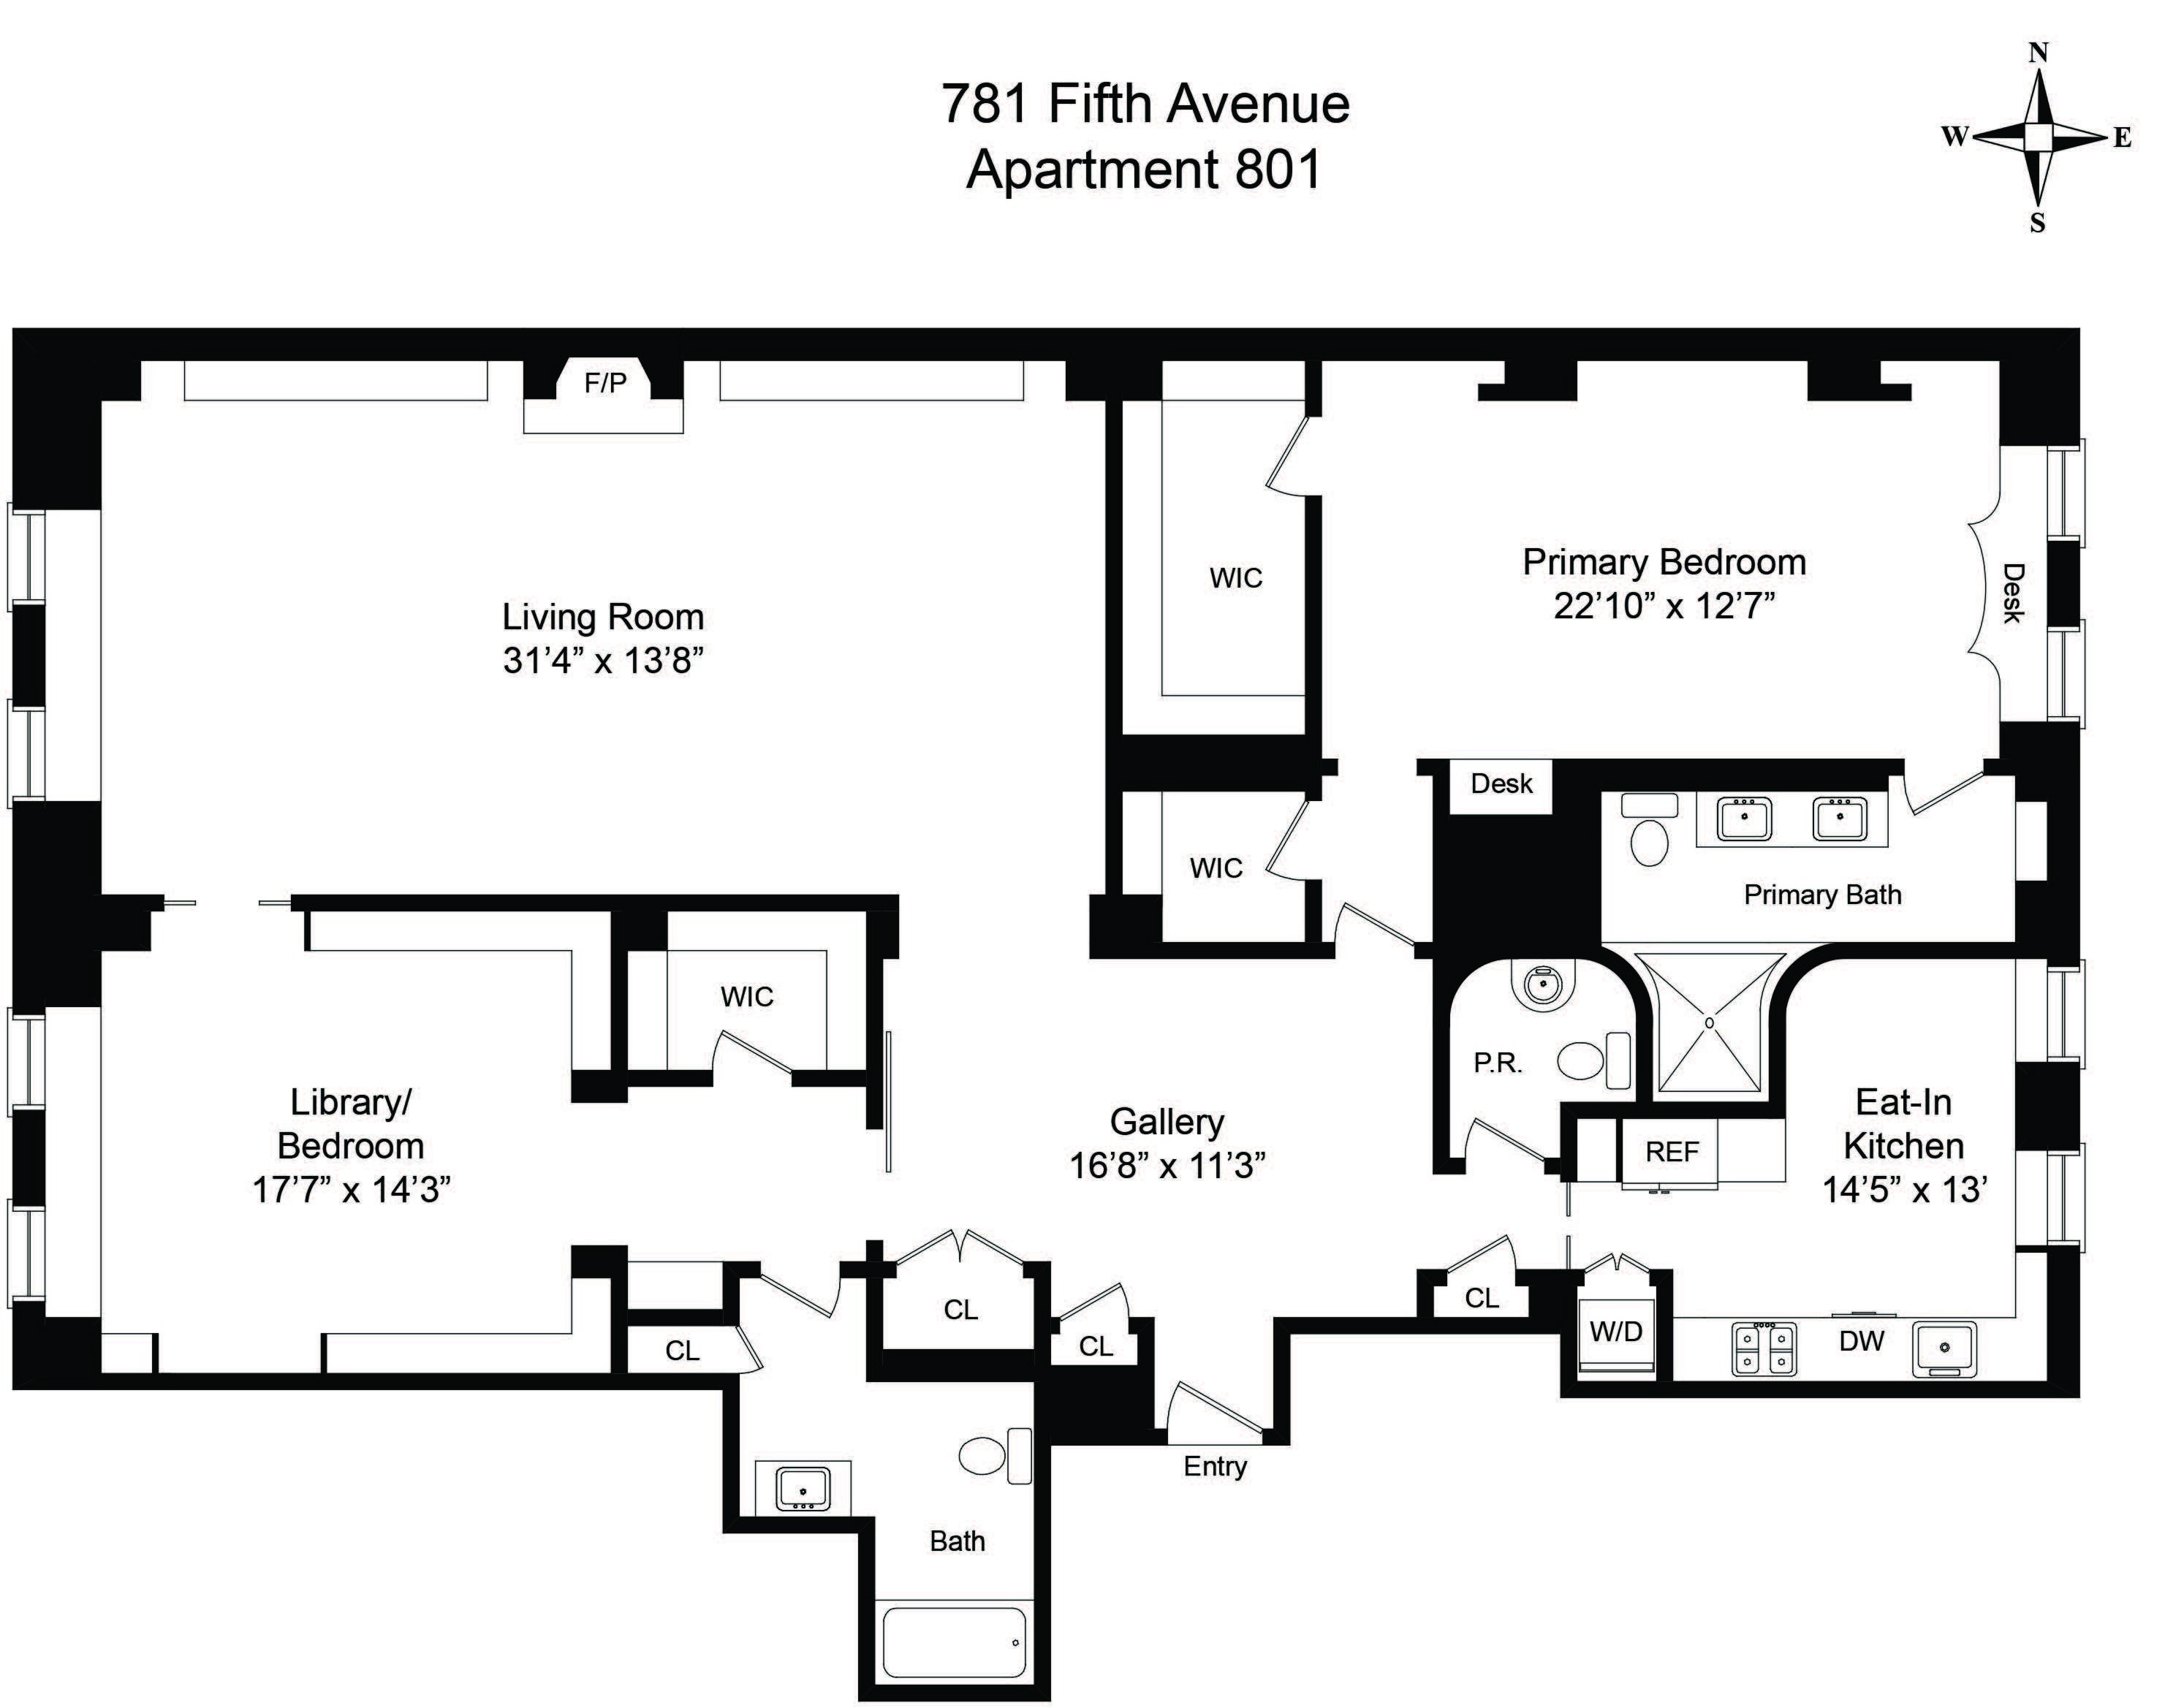 Floorplan for 781 Fifth Avenue, 801